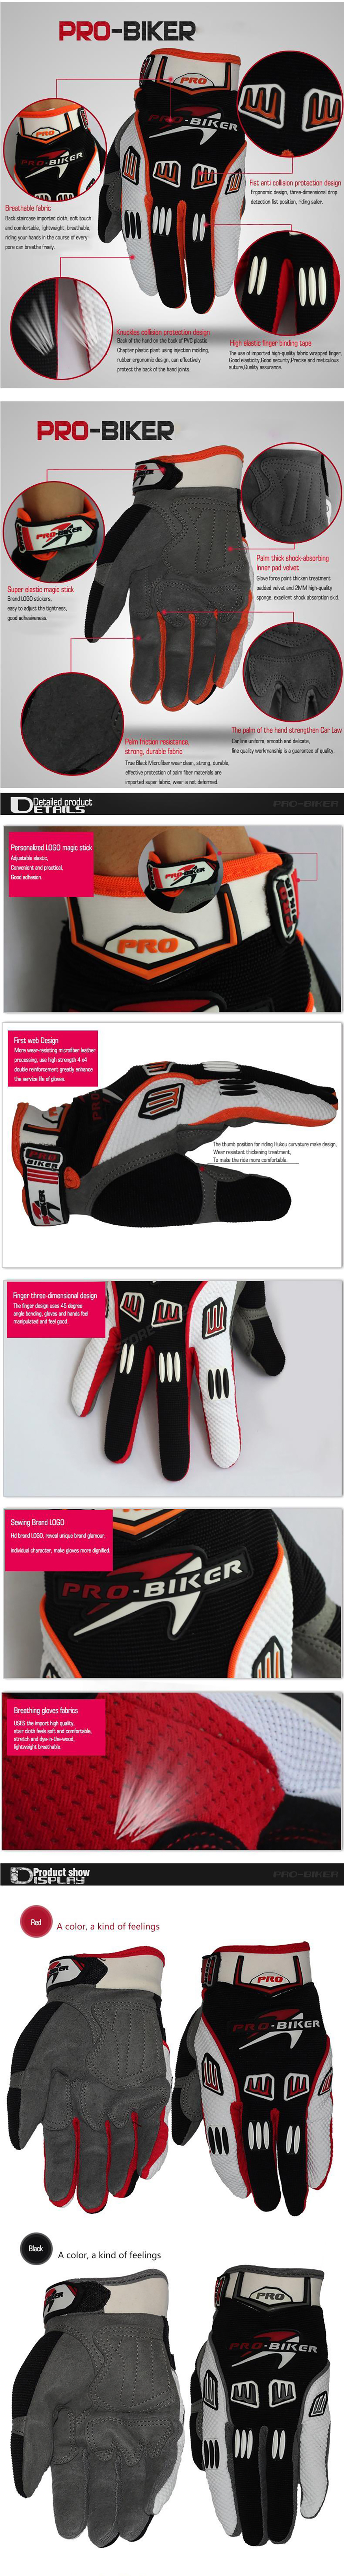 PRO-BIKER CE-02 Motorcycle Full Finger Protective Racing Gloves